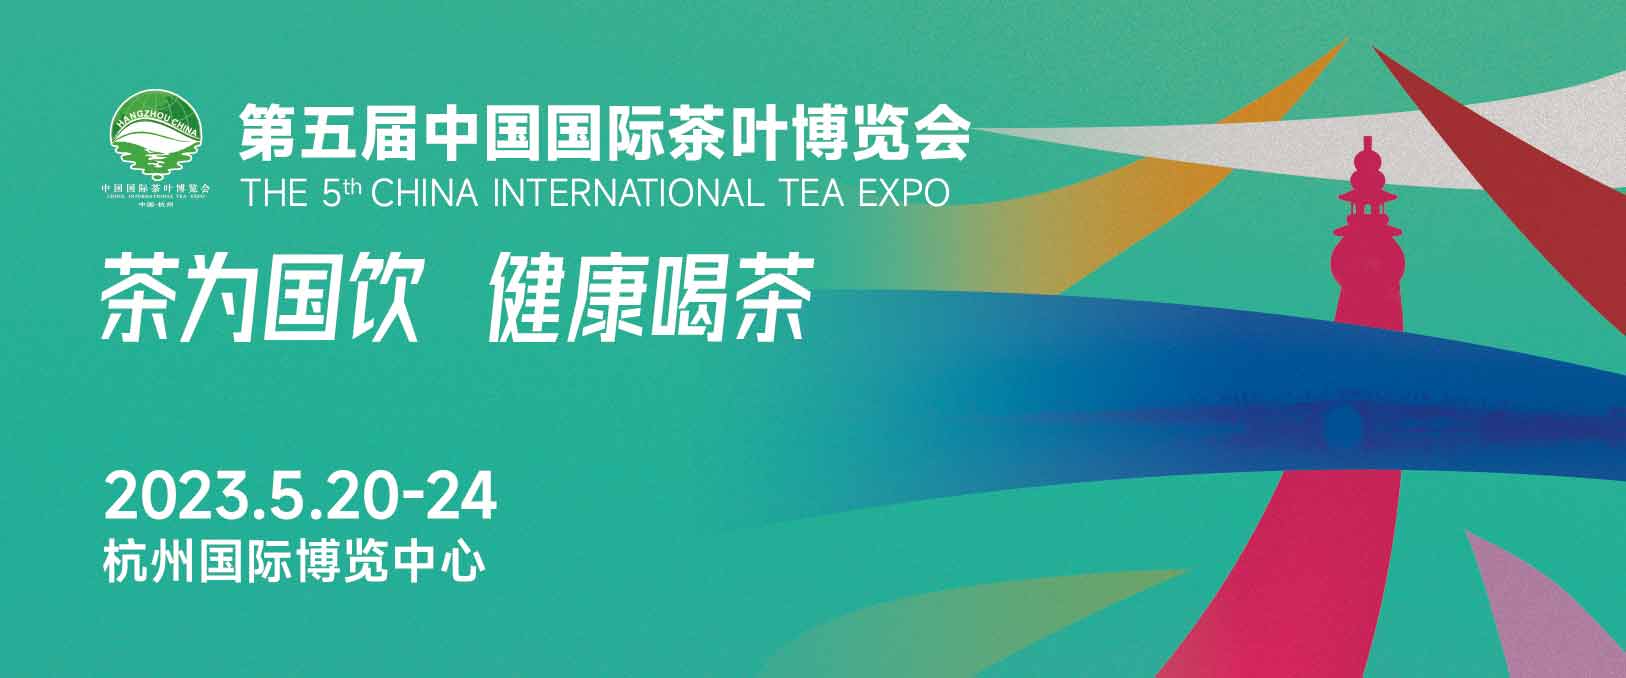 2023 The 5th China international tea expo